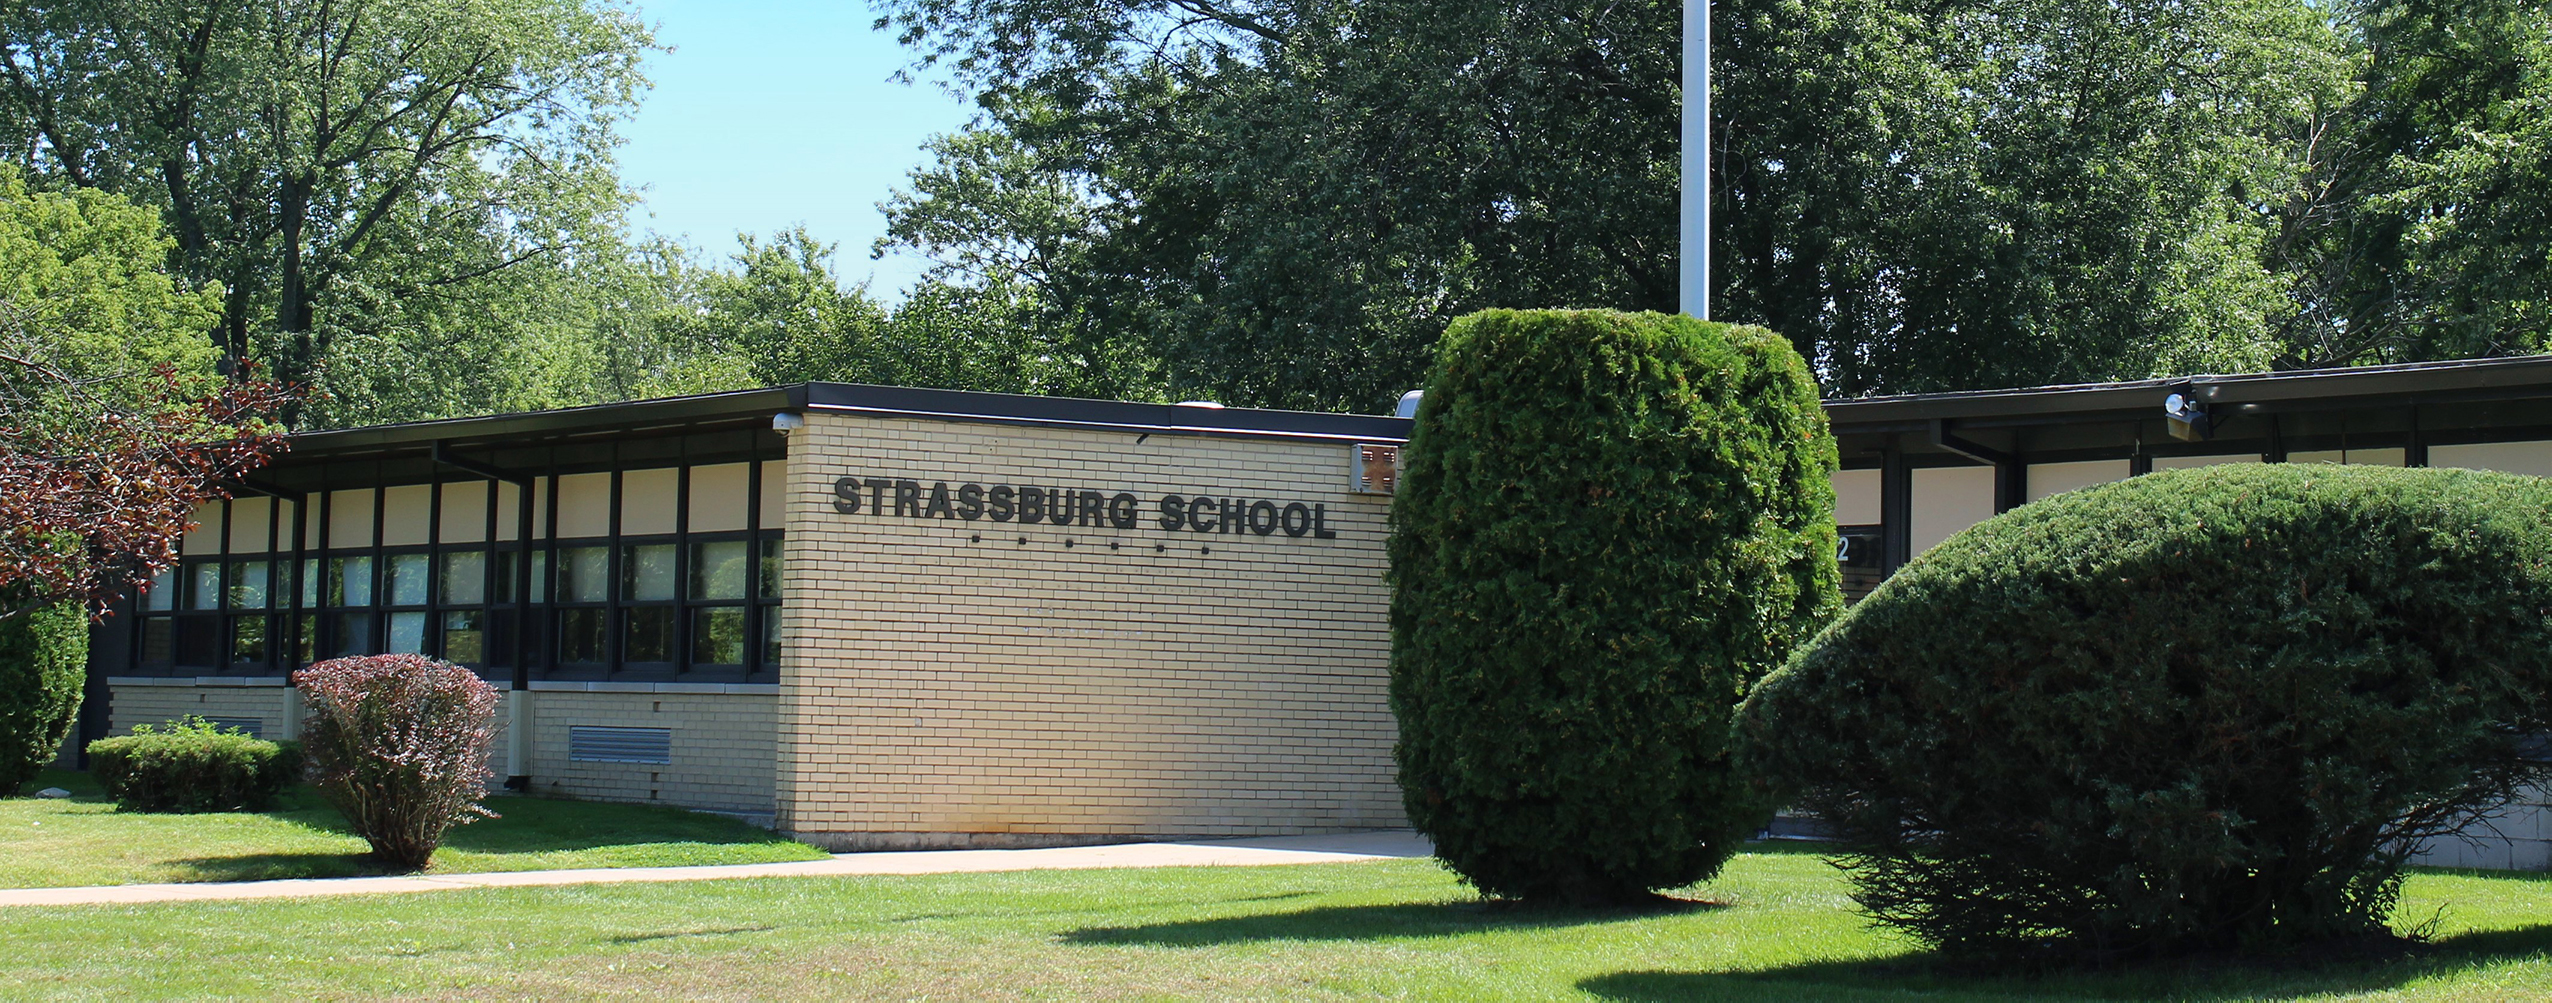 Strassburg Elementary School